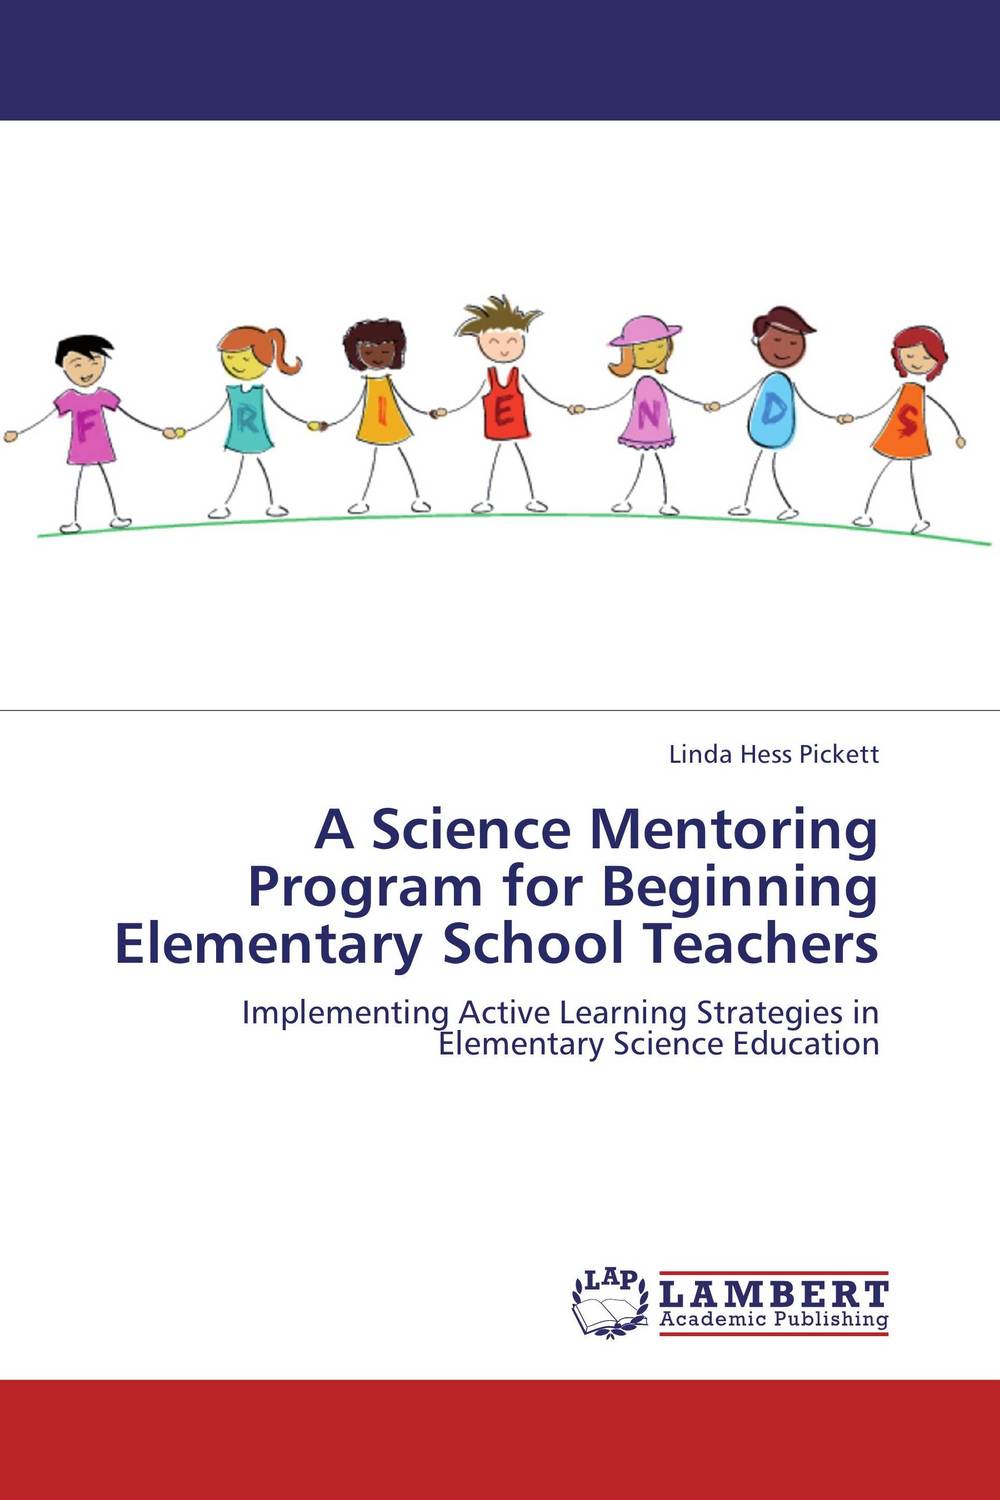 A Science Mentoring Program for Beginning Elementary School Teachers